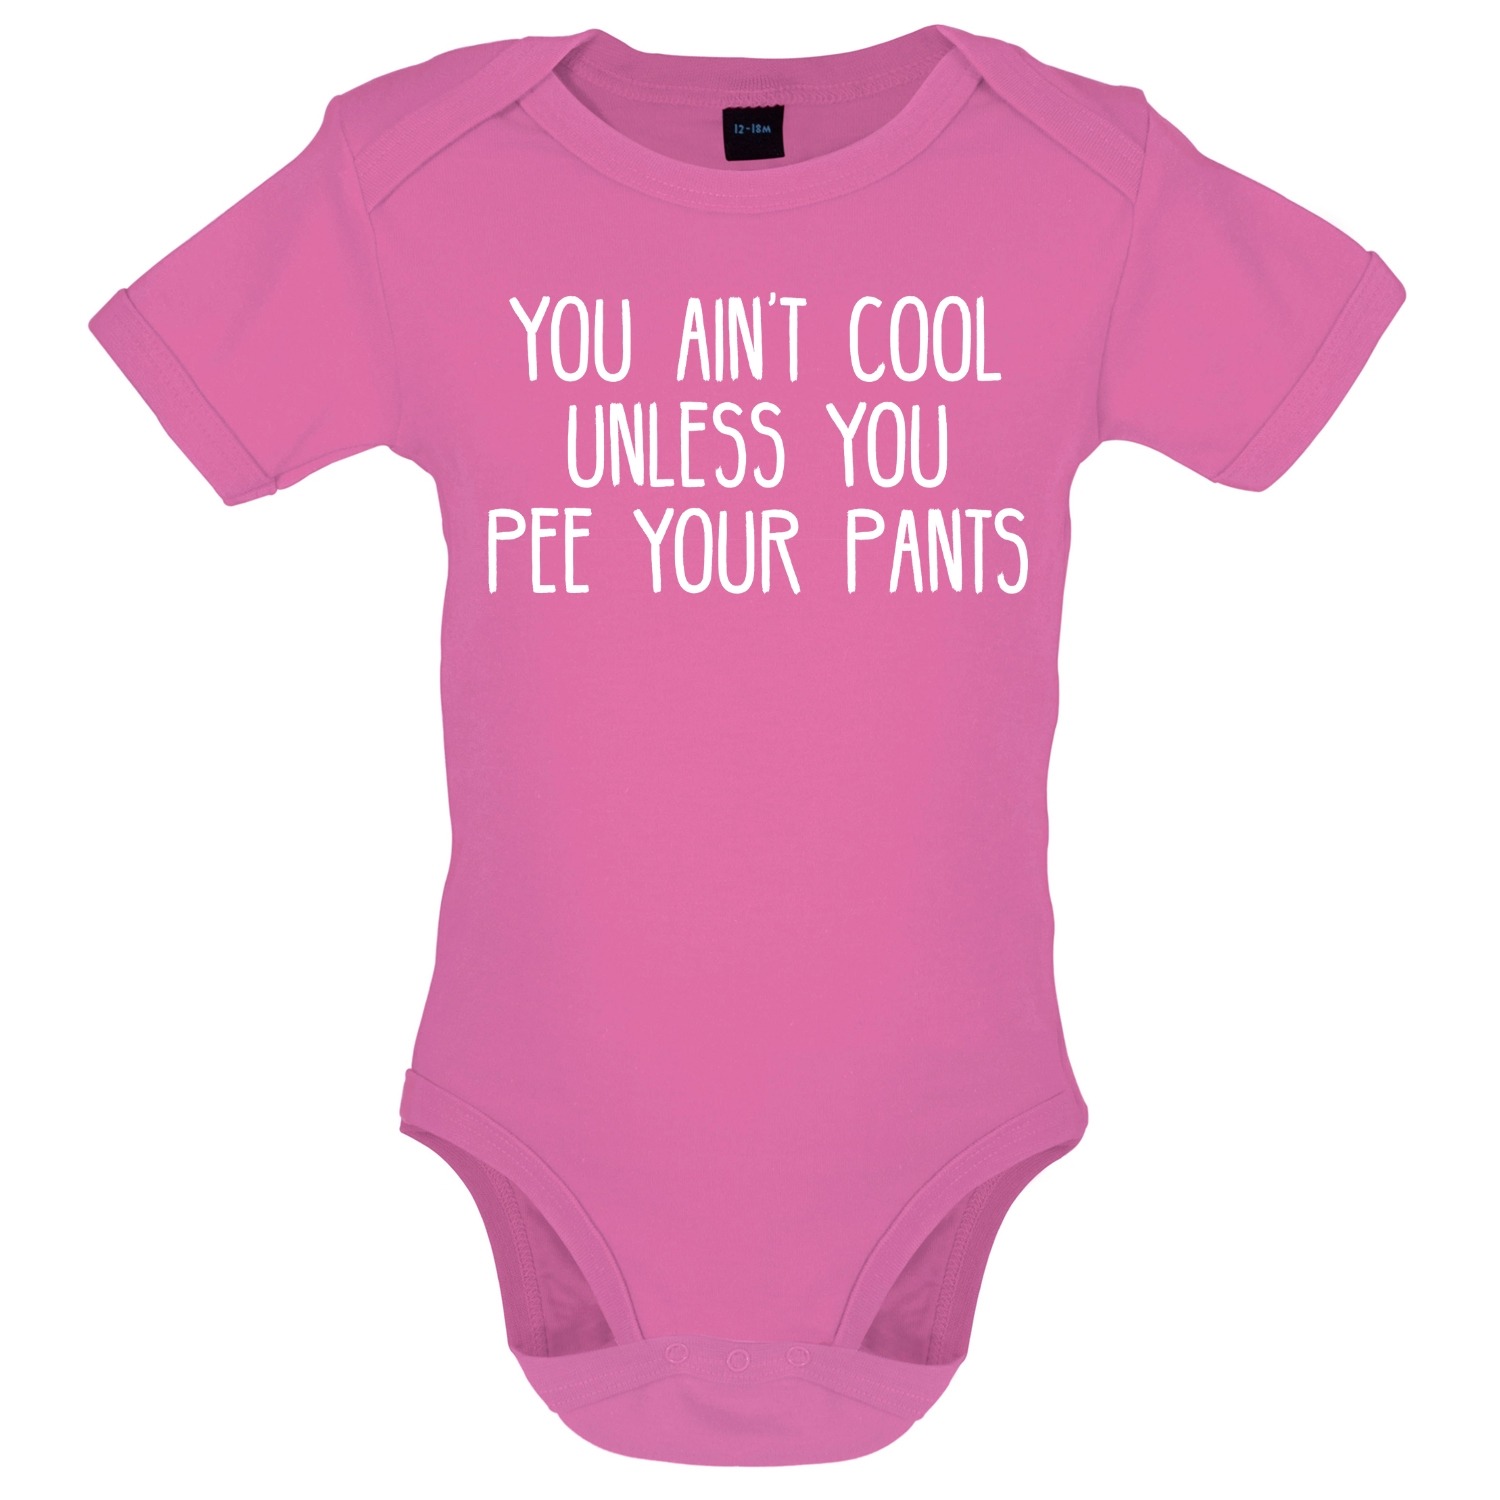 Cool pee your pants baby bodysuit pink.